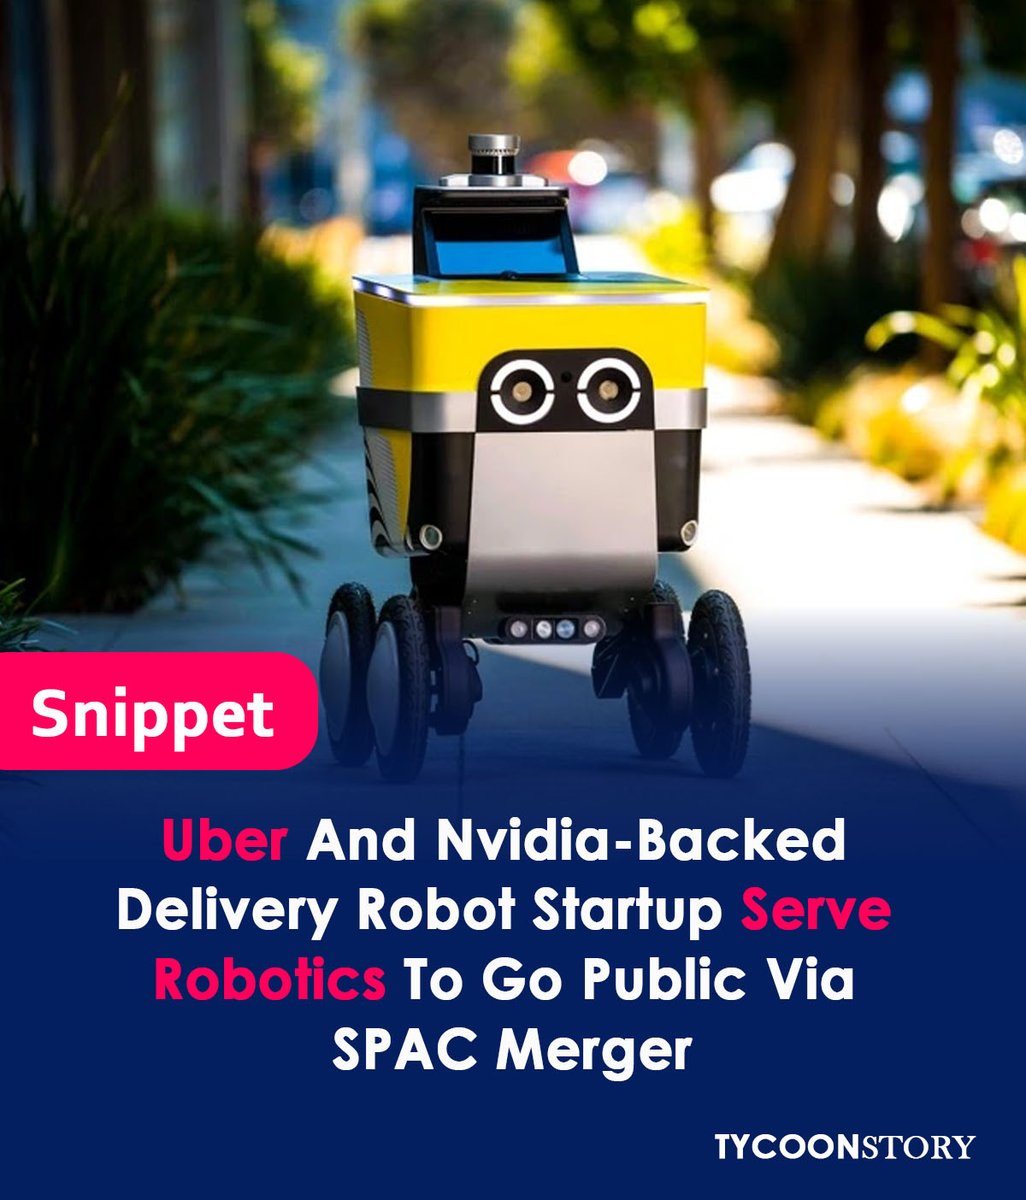 Uber and Nvidia-backed delivery robot startup Serve Robotics to go public via SPAC merger
#ServeRobotics #autonomousrobots #deliveryrobot #strategicpartners #autonomousvehicles #publiccompany #fooddelivery #enterprises #innovative #business #fooddeliveryapp @Uber  @nvidia